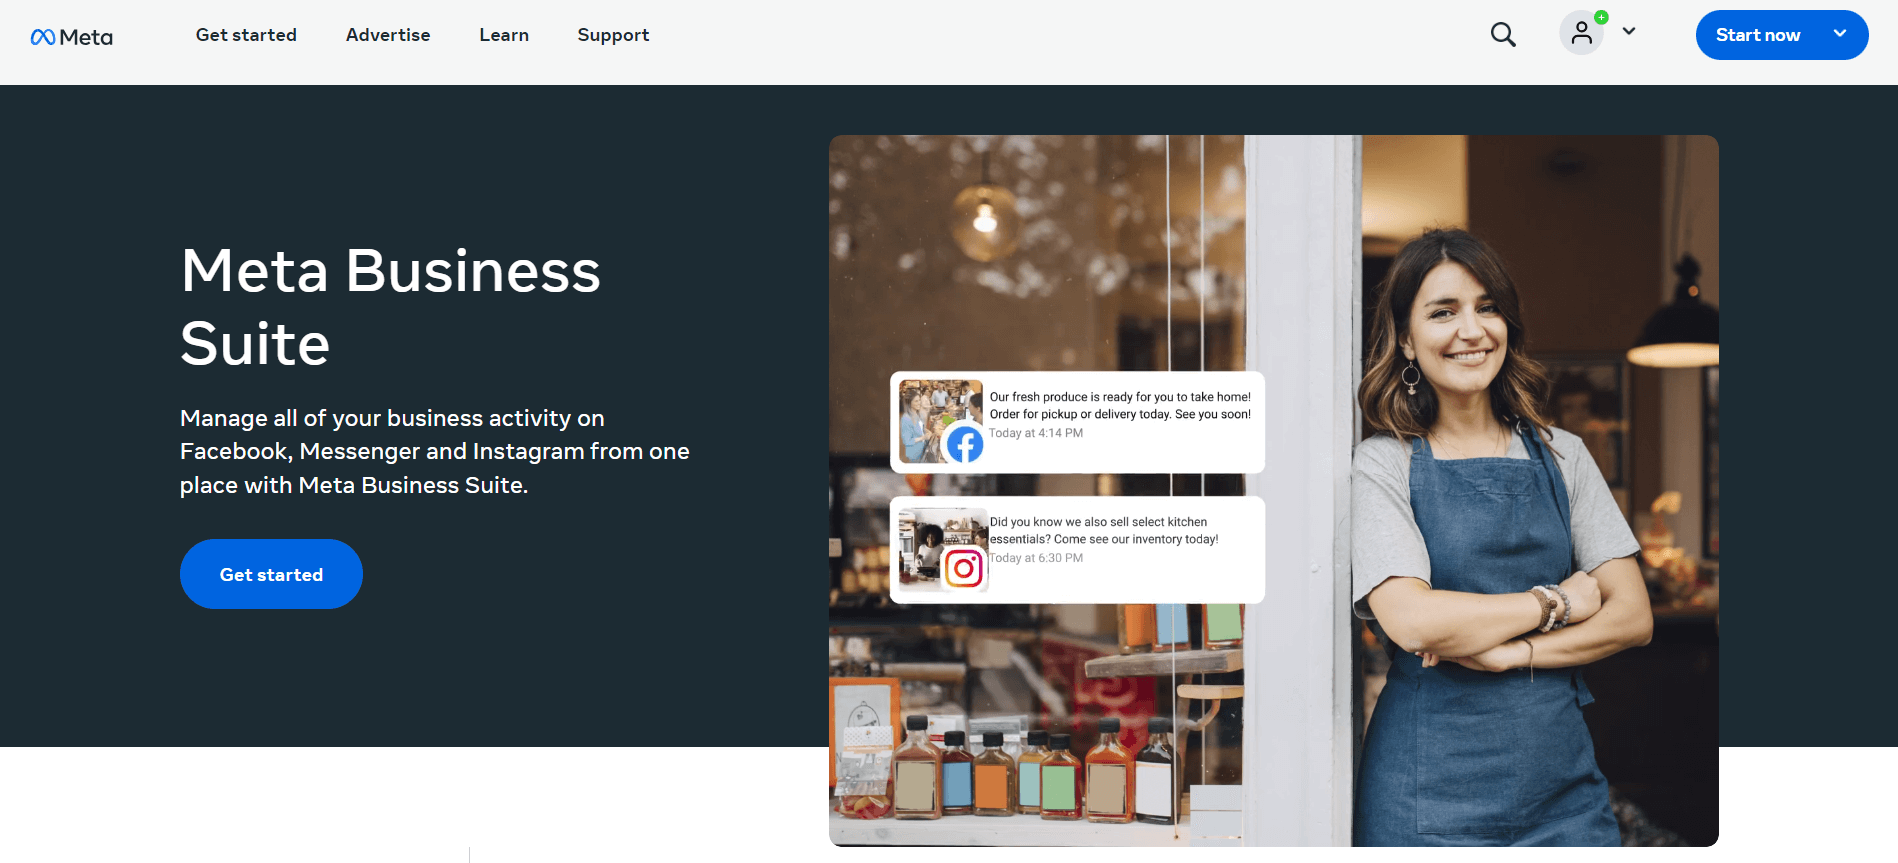 Meta Business Suite's homepage 